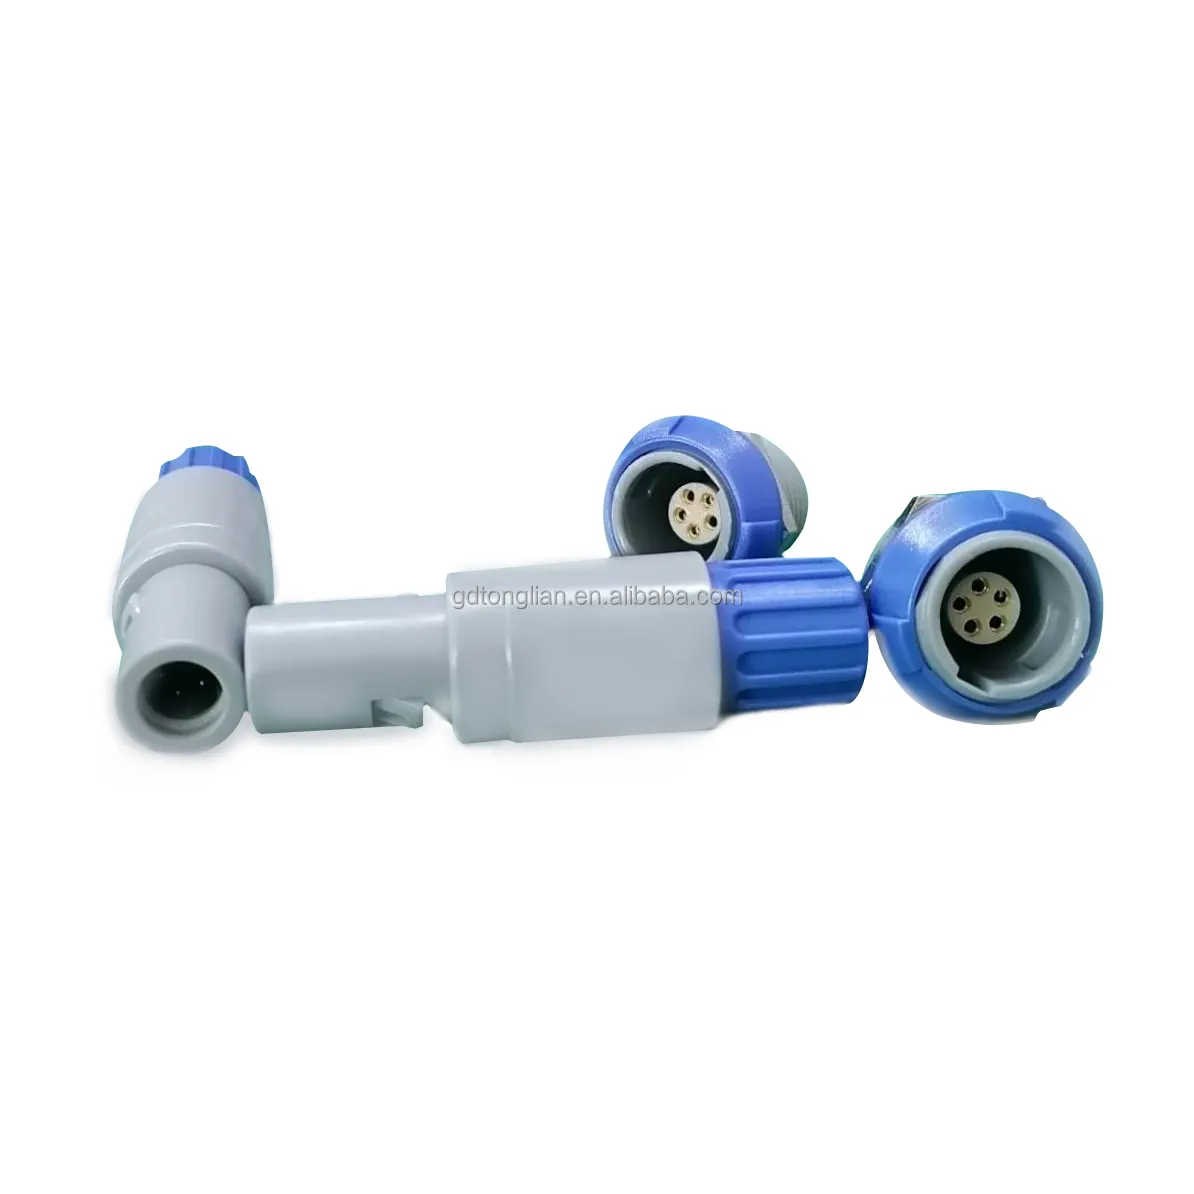 Kustom peralatan medis plastik Push-pull 5 Pin konektor tahan air 1P Series biru melingkar PAG steker Lurus